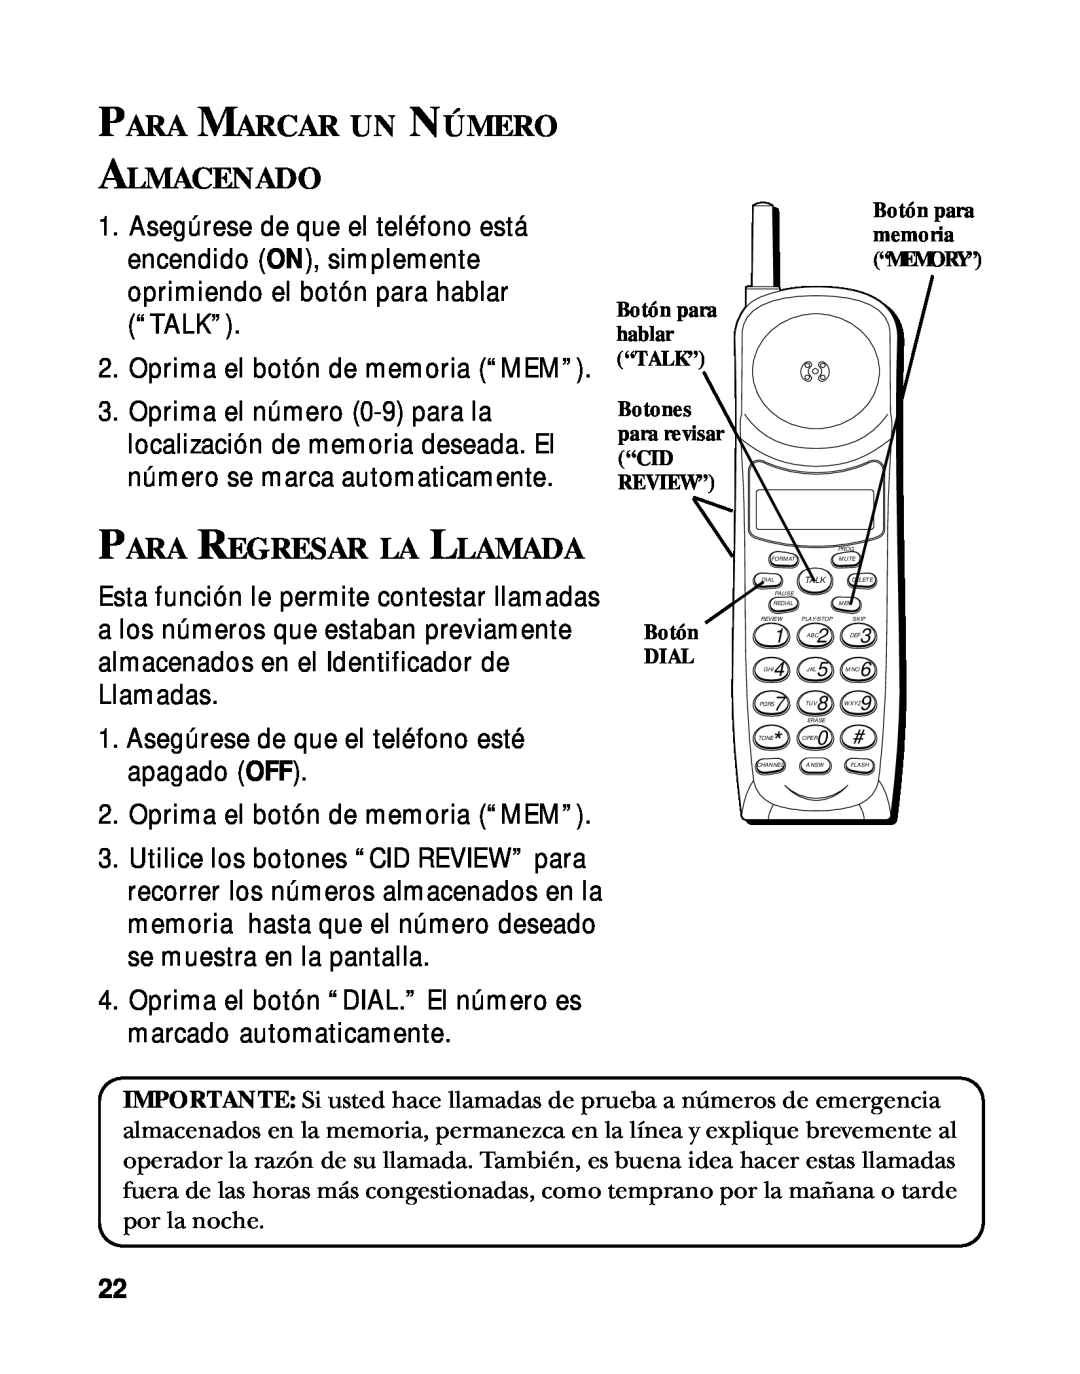 RCA 900 MHz manual Para Marcar Un Número Almacenado, Para Regresar La Llamada 